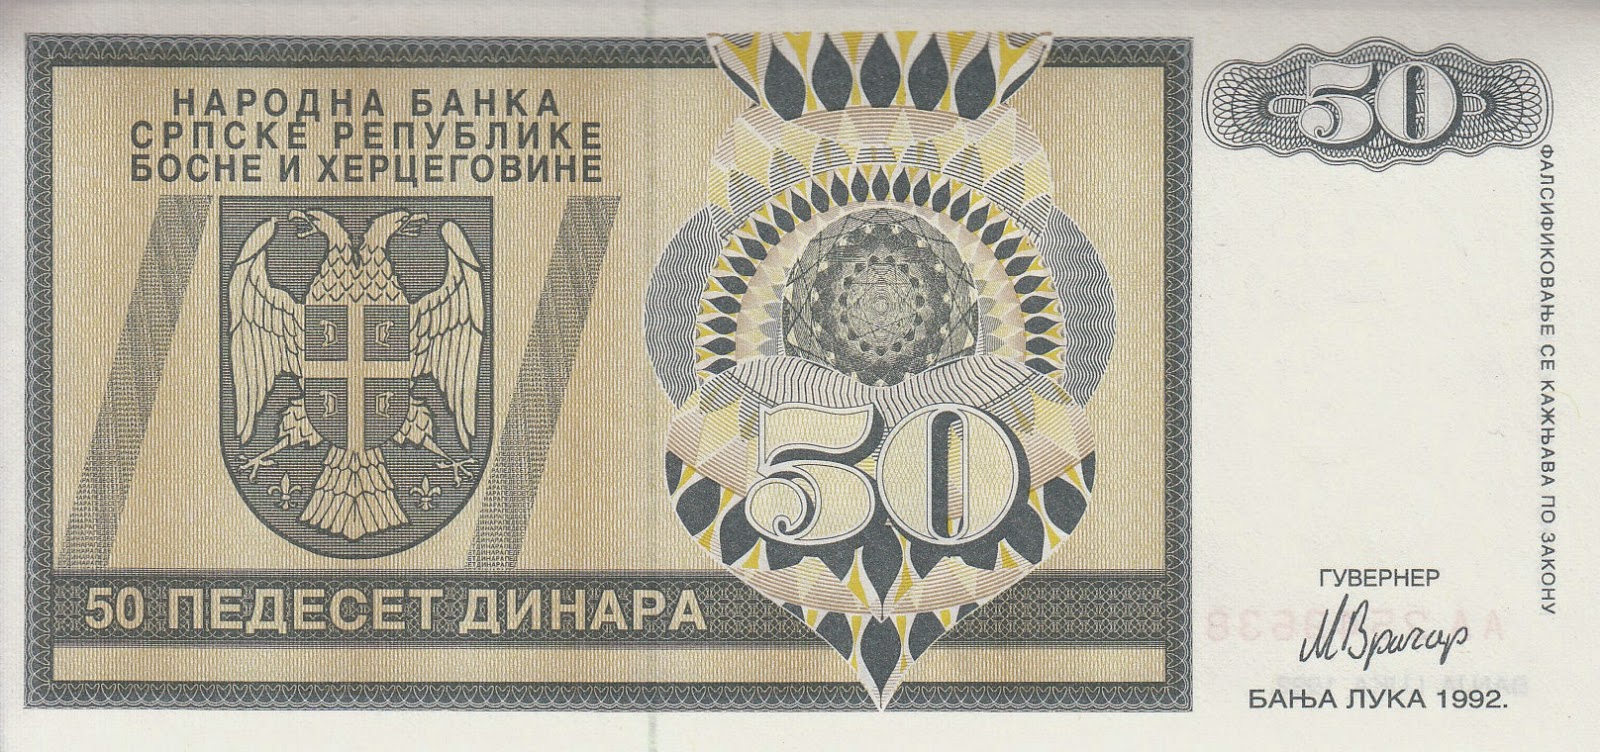 YUGOSLAVIA 50,000 1993 50000 Hyperinflation World Currency P-130 Dinara